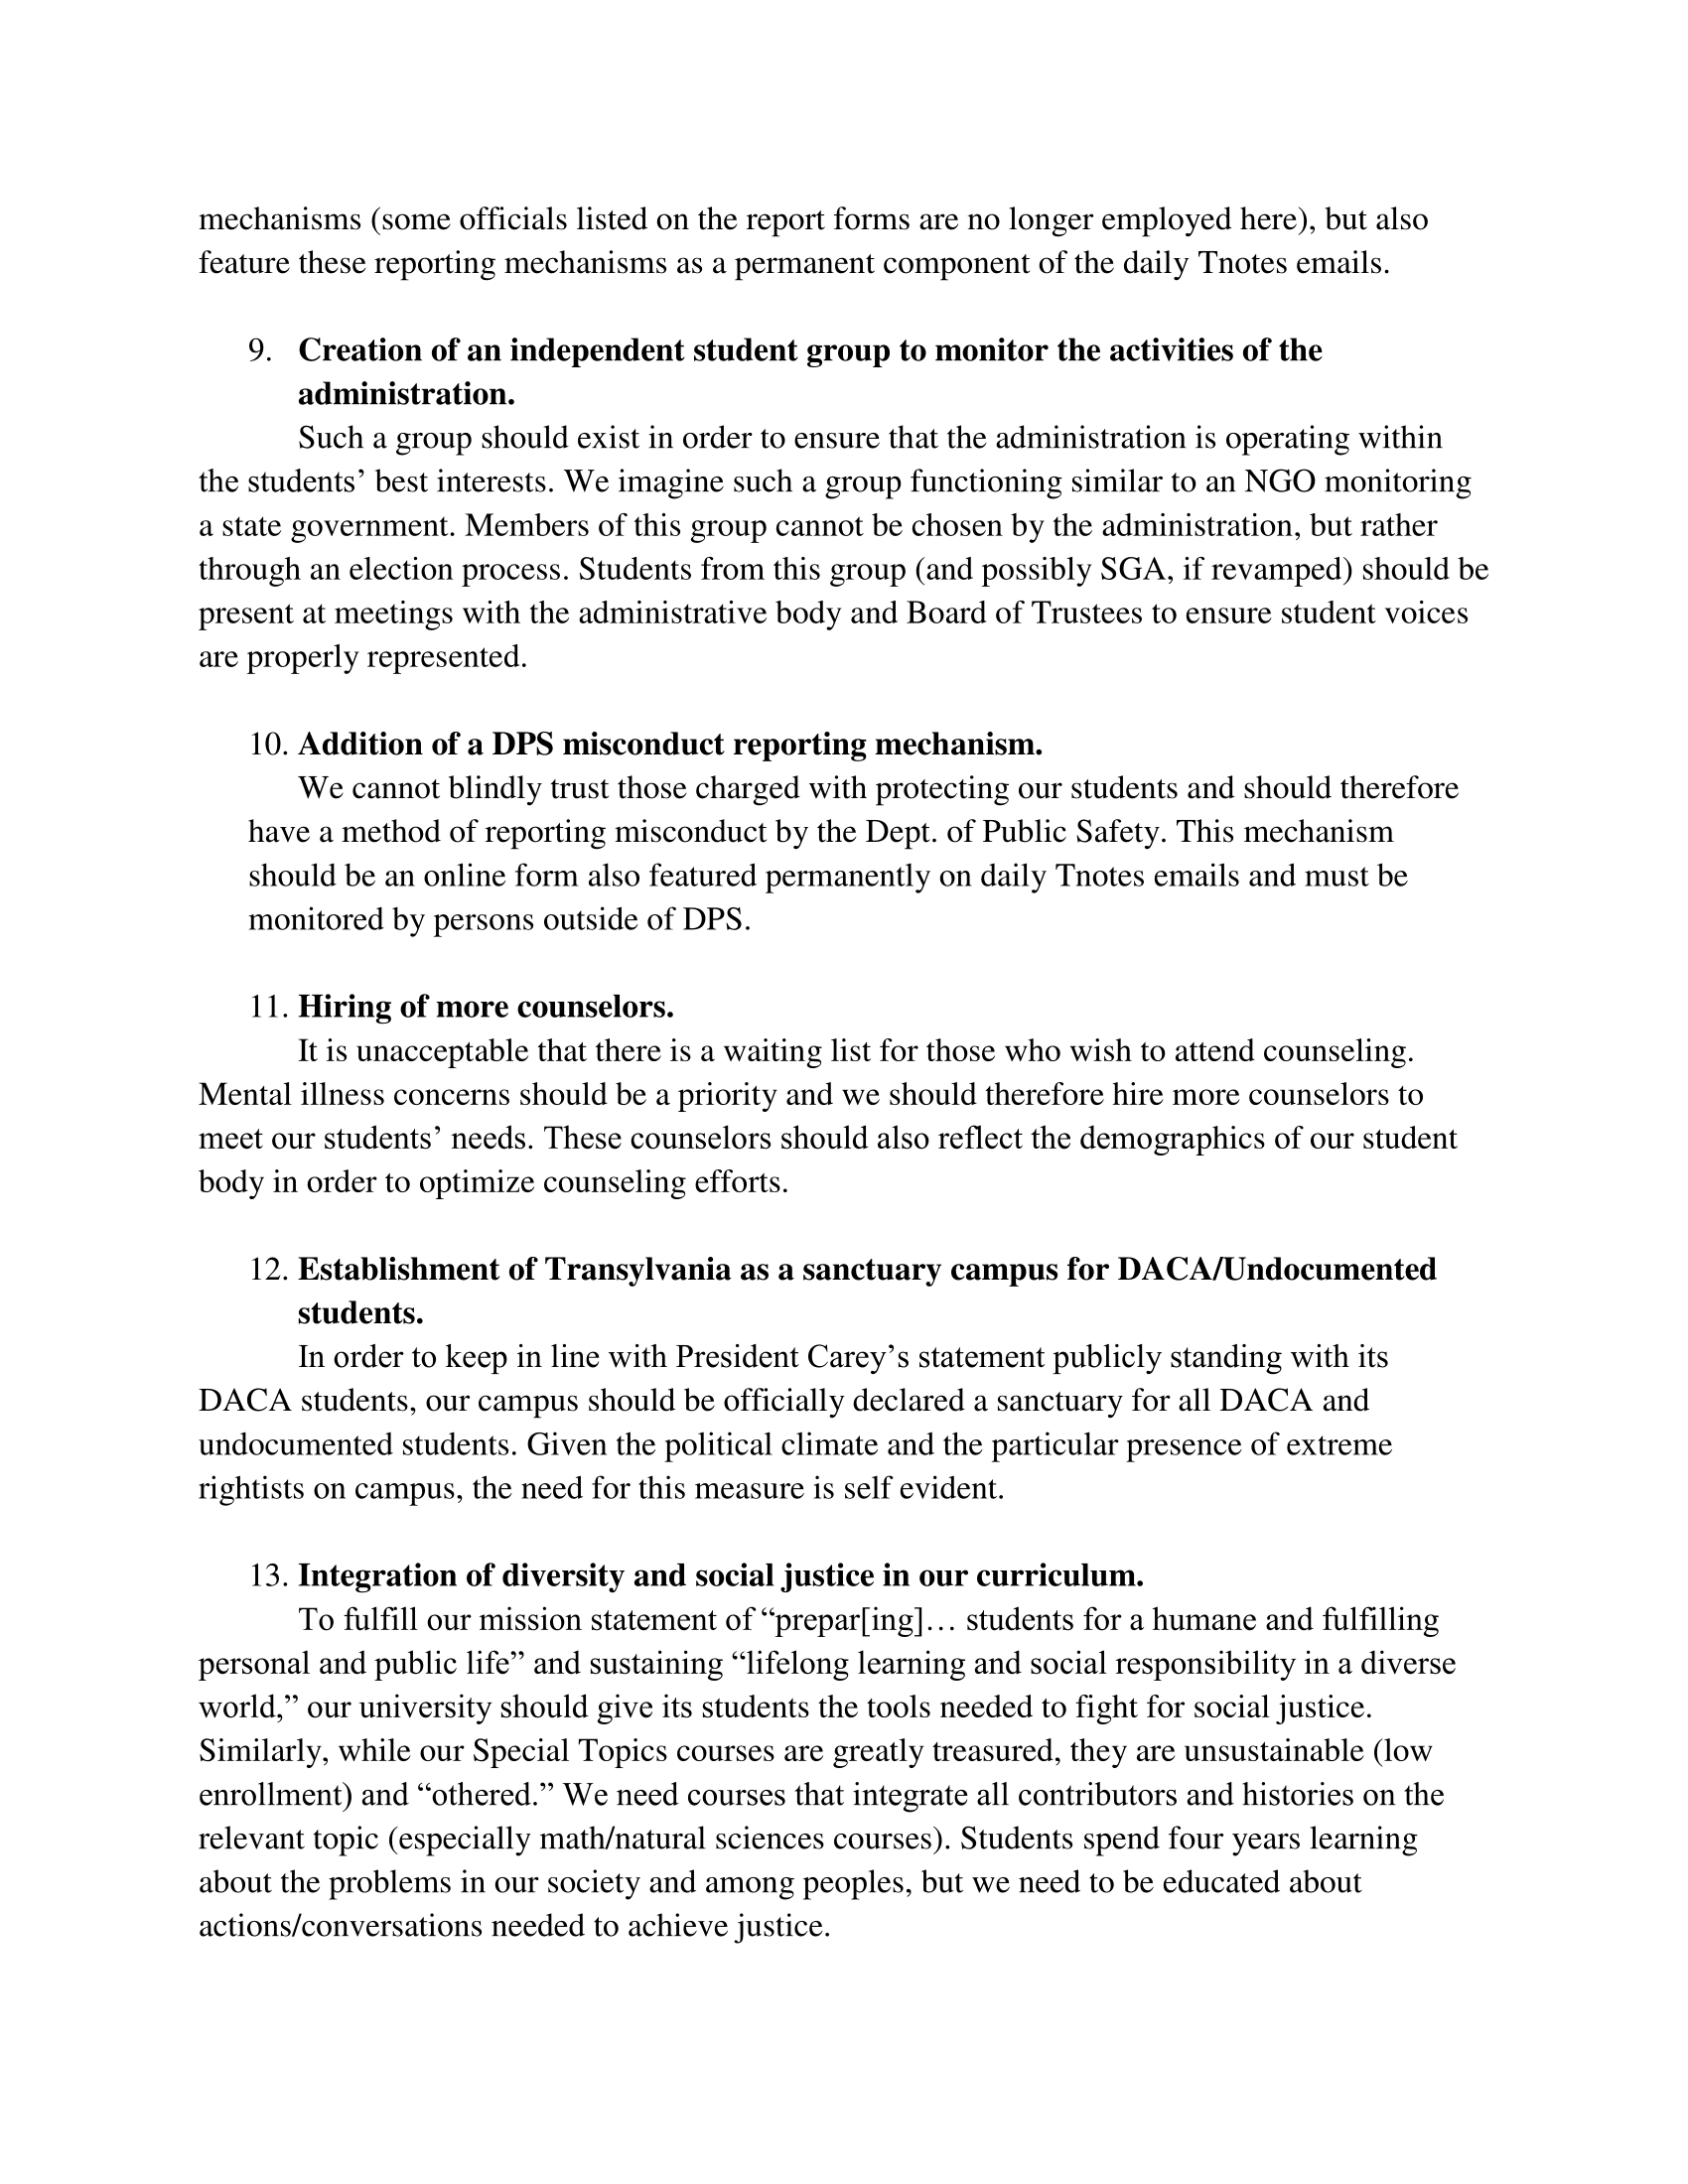 Demonstrators' list of demands, page 3